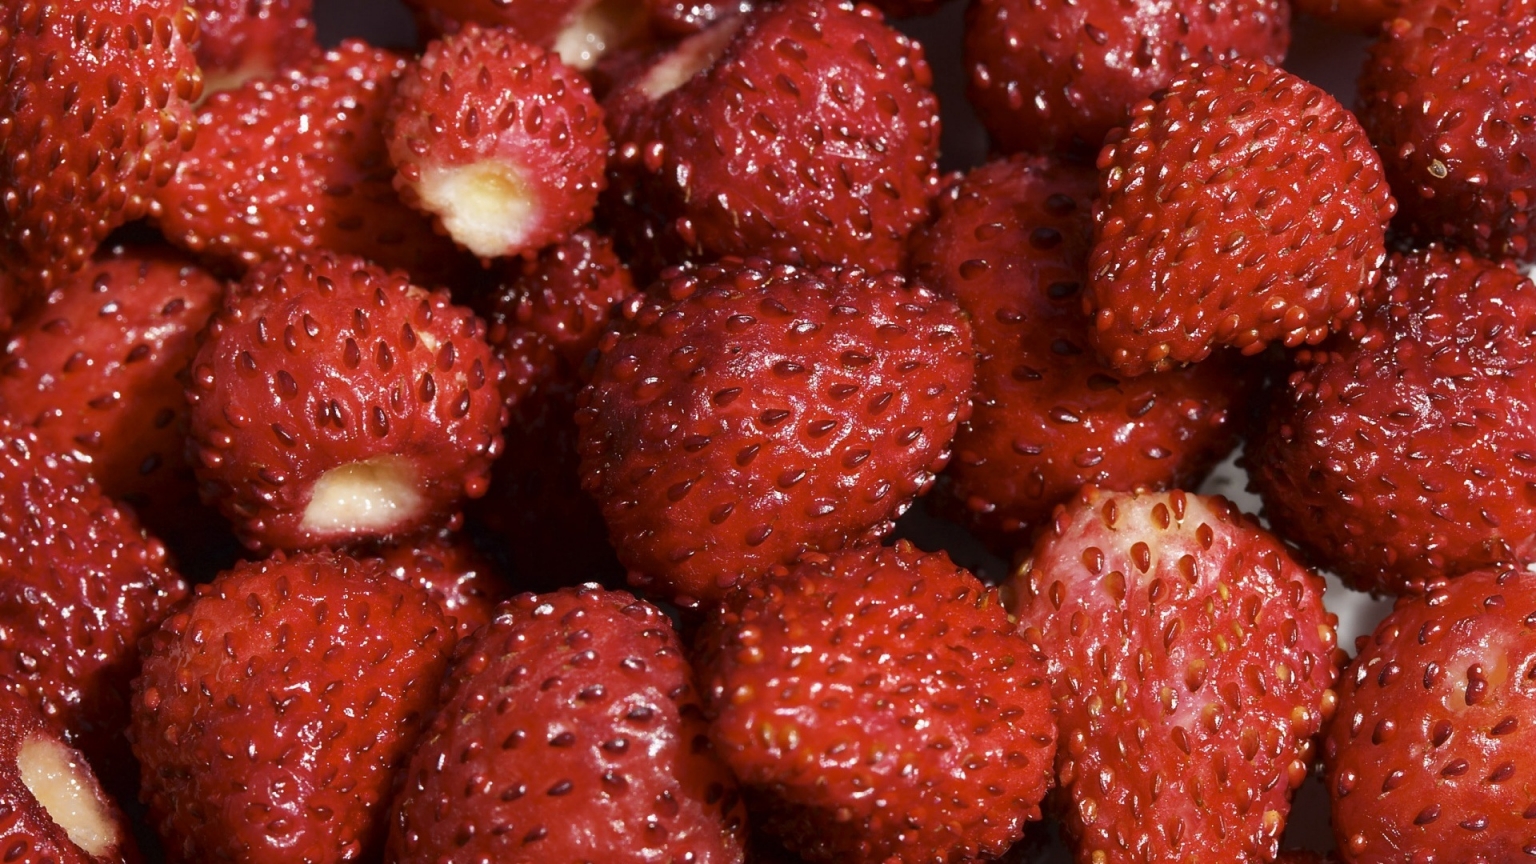 Strawberries for 1536 x 864 HDTV resolution